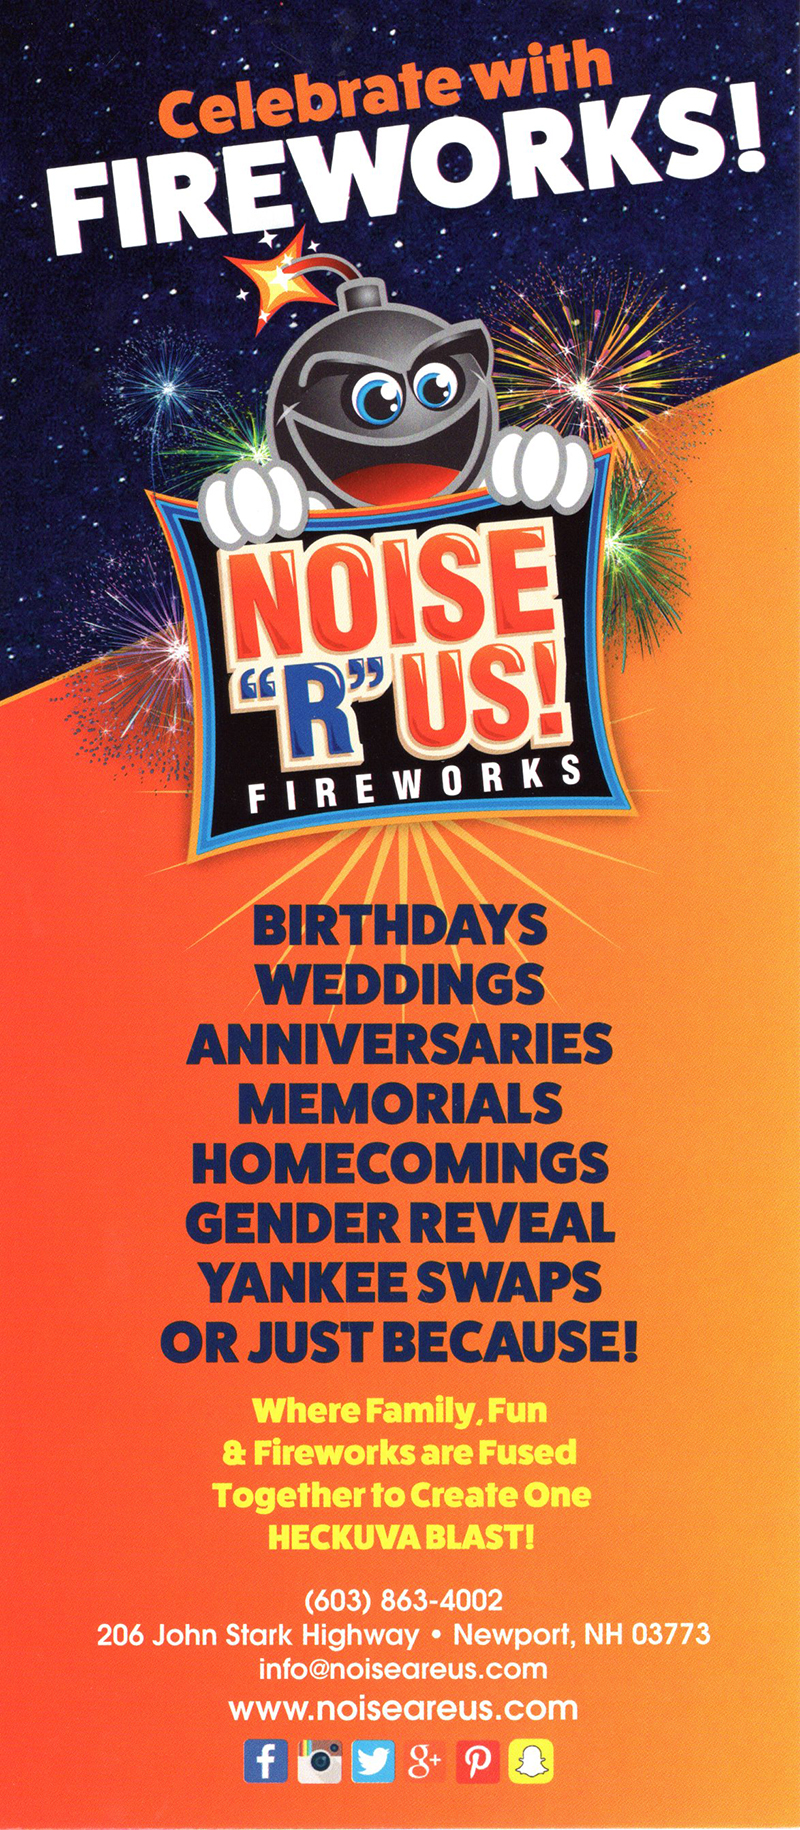 Noise "R" Us Fireworks brochure thumbnail